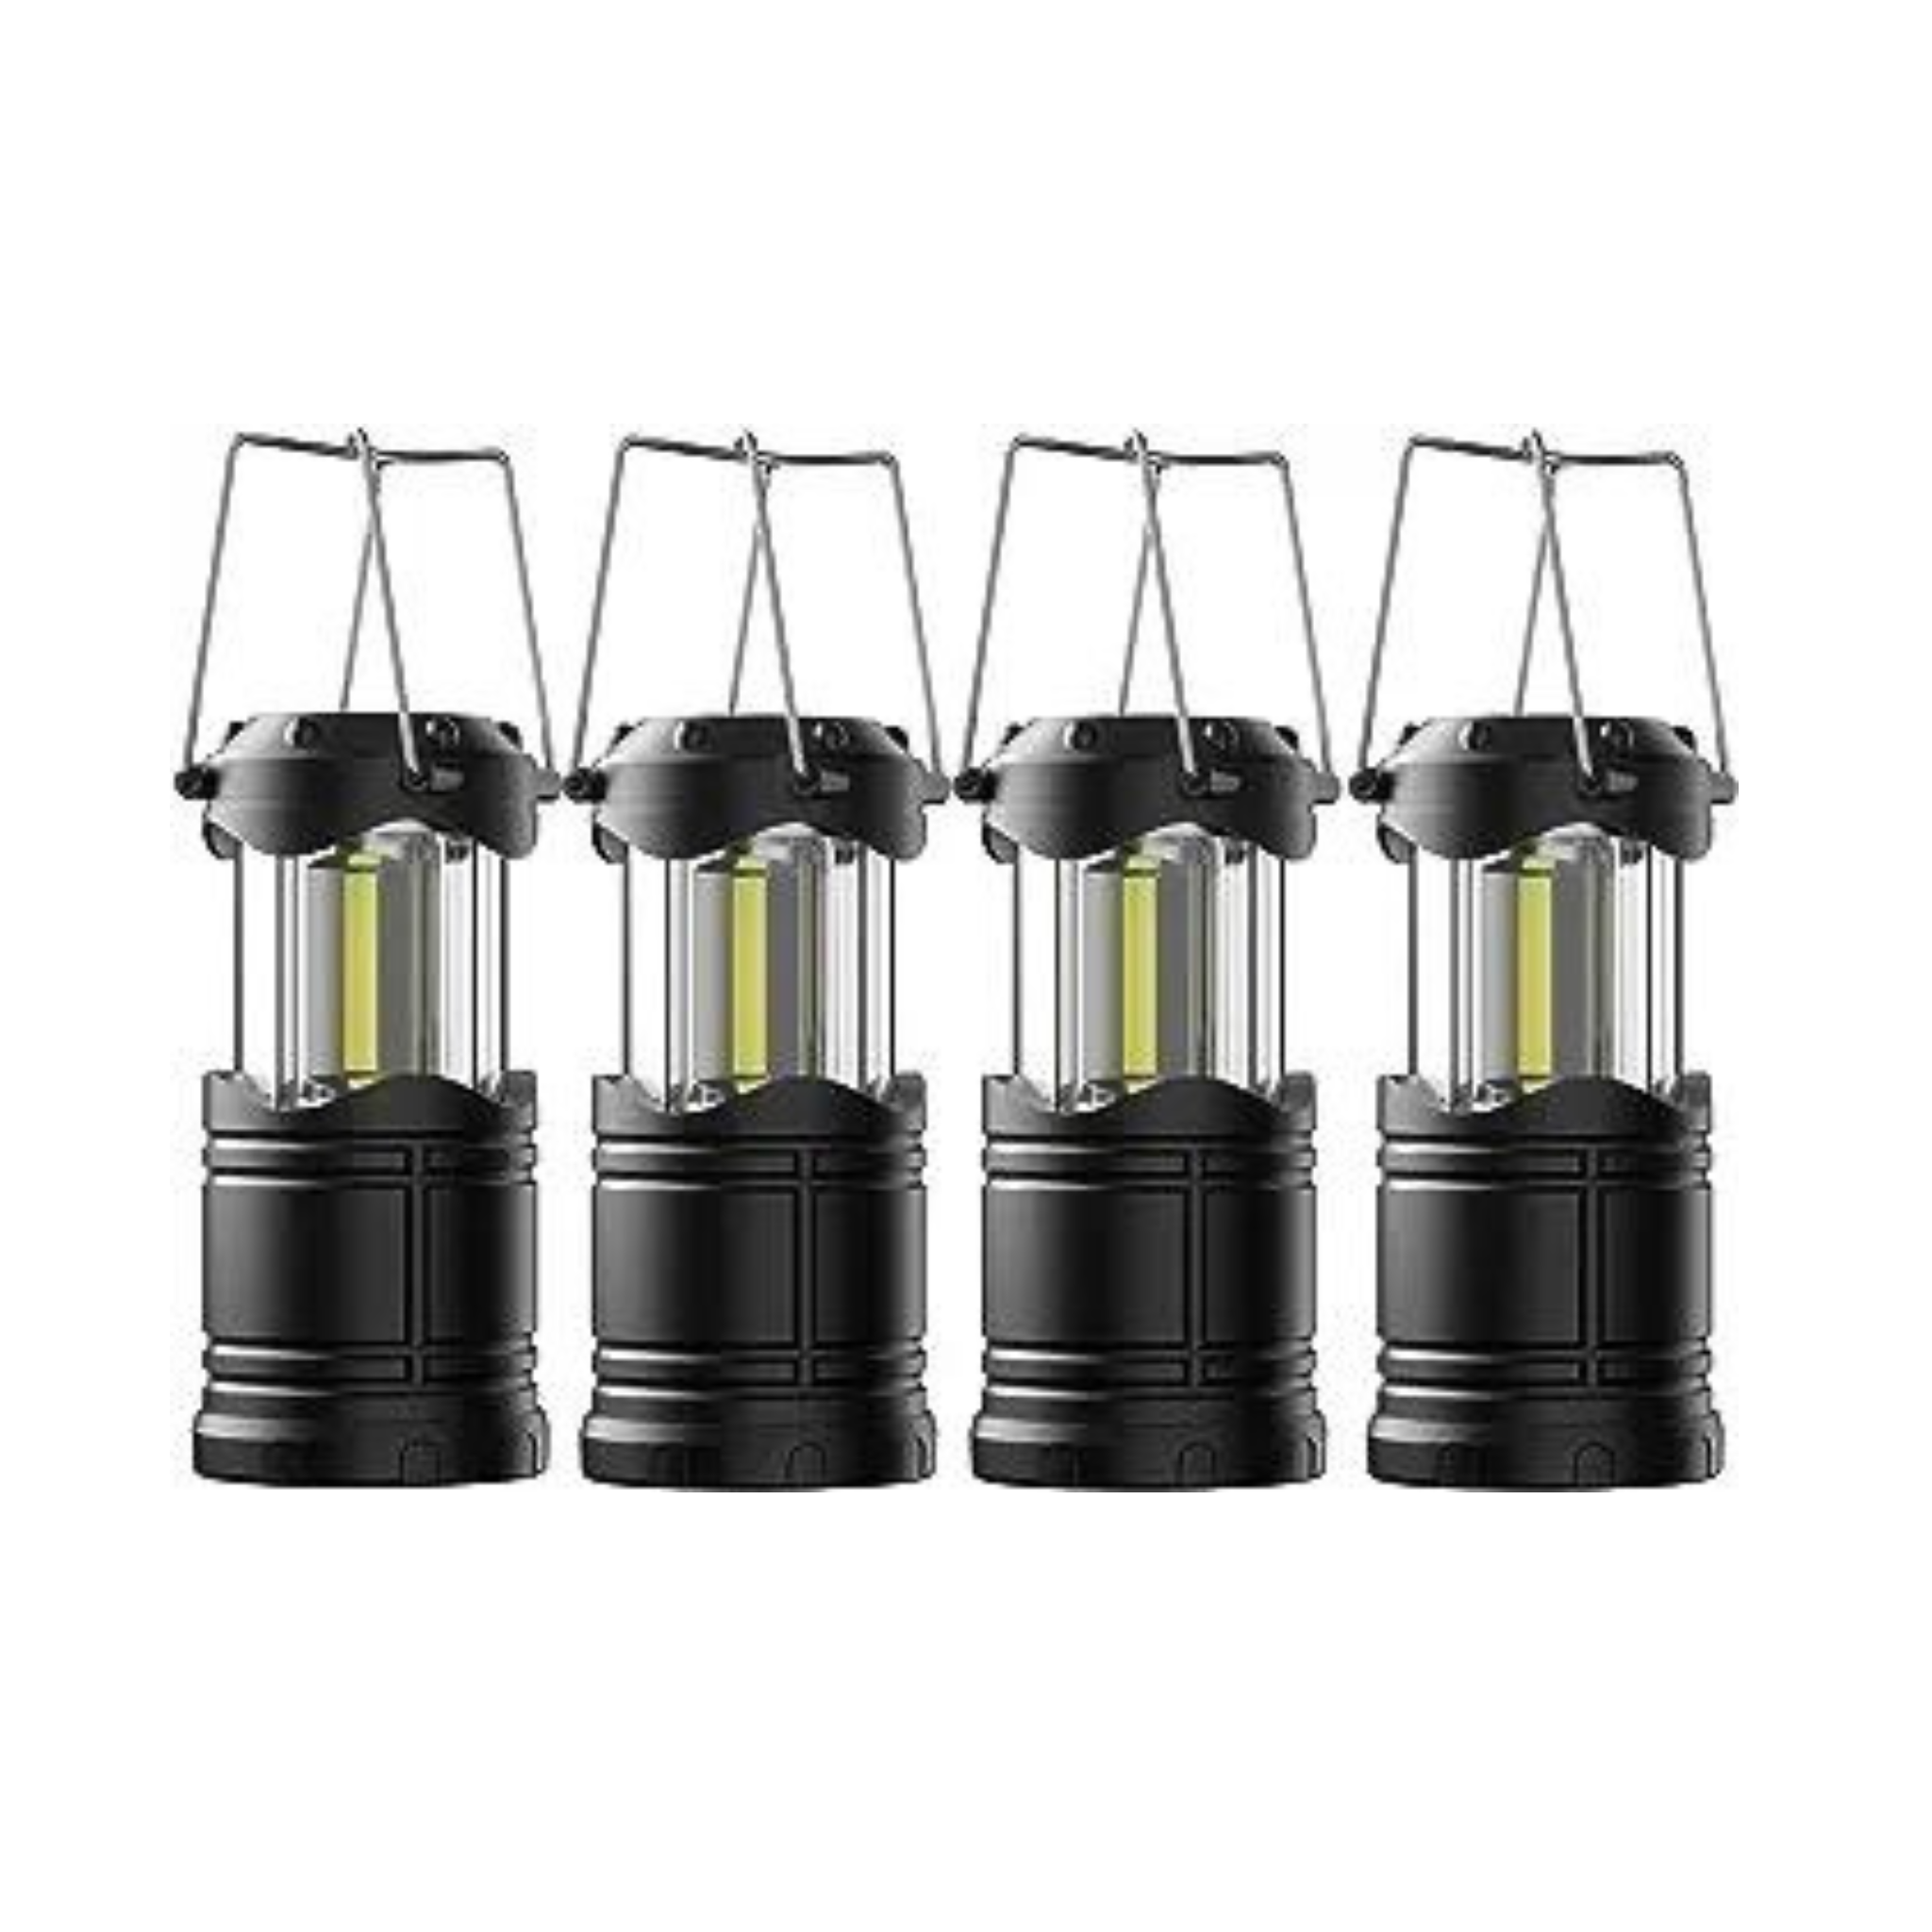 4-Pack Lichamp Battery Powered LED Camping Lanterns (Black)